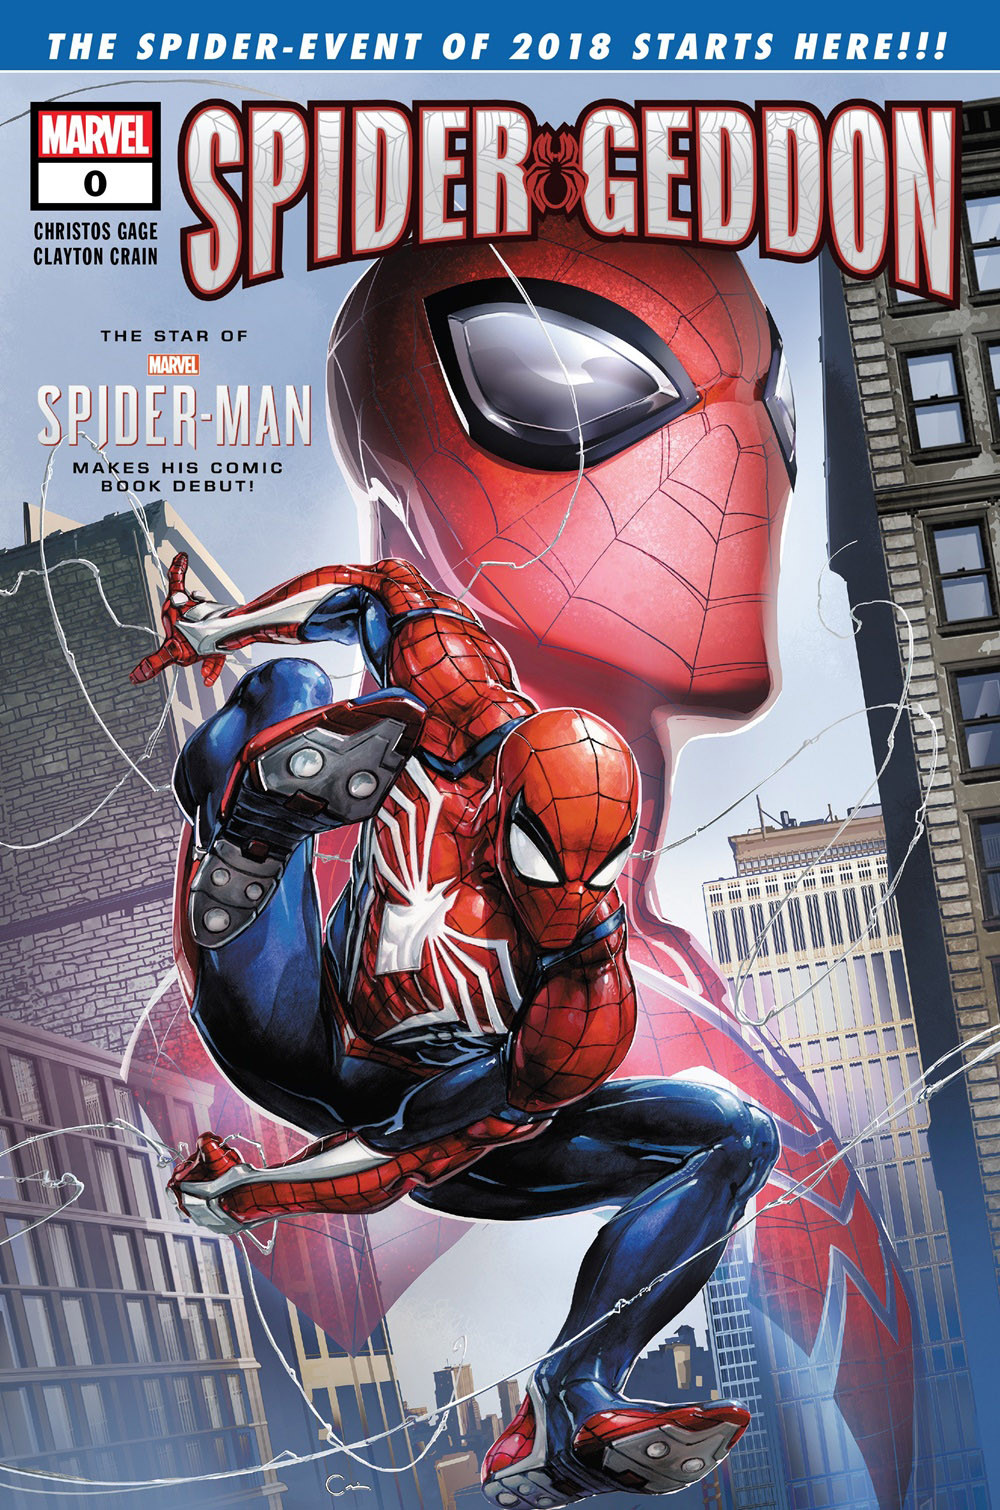 Tentang Marvel Spider-Geddon (Sinopsis Singkat dan Urutan 